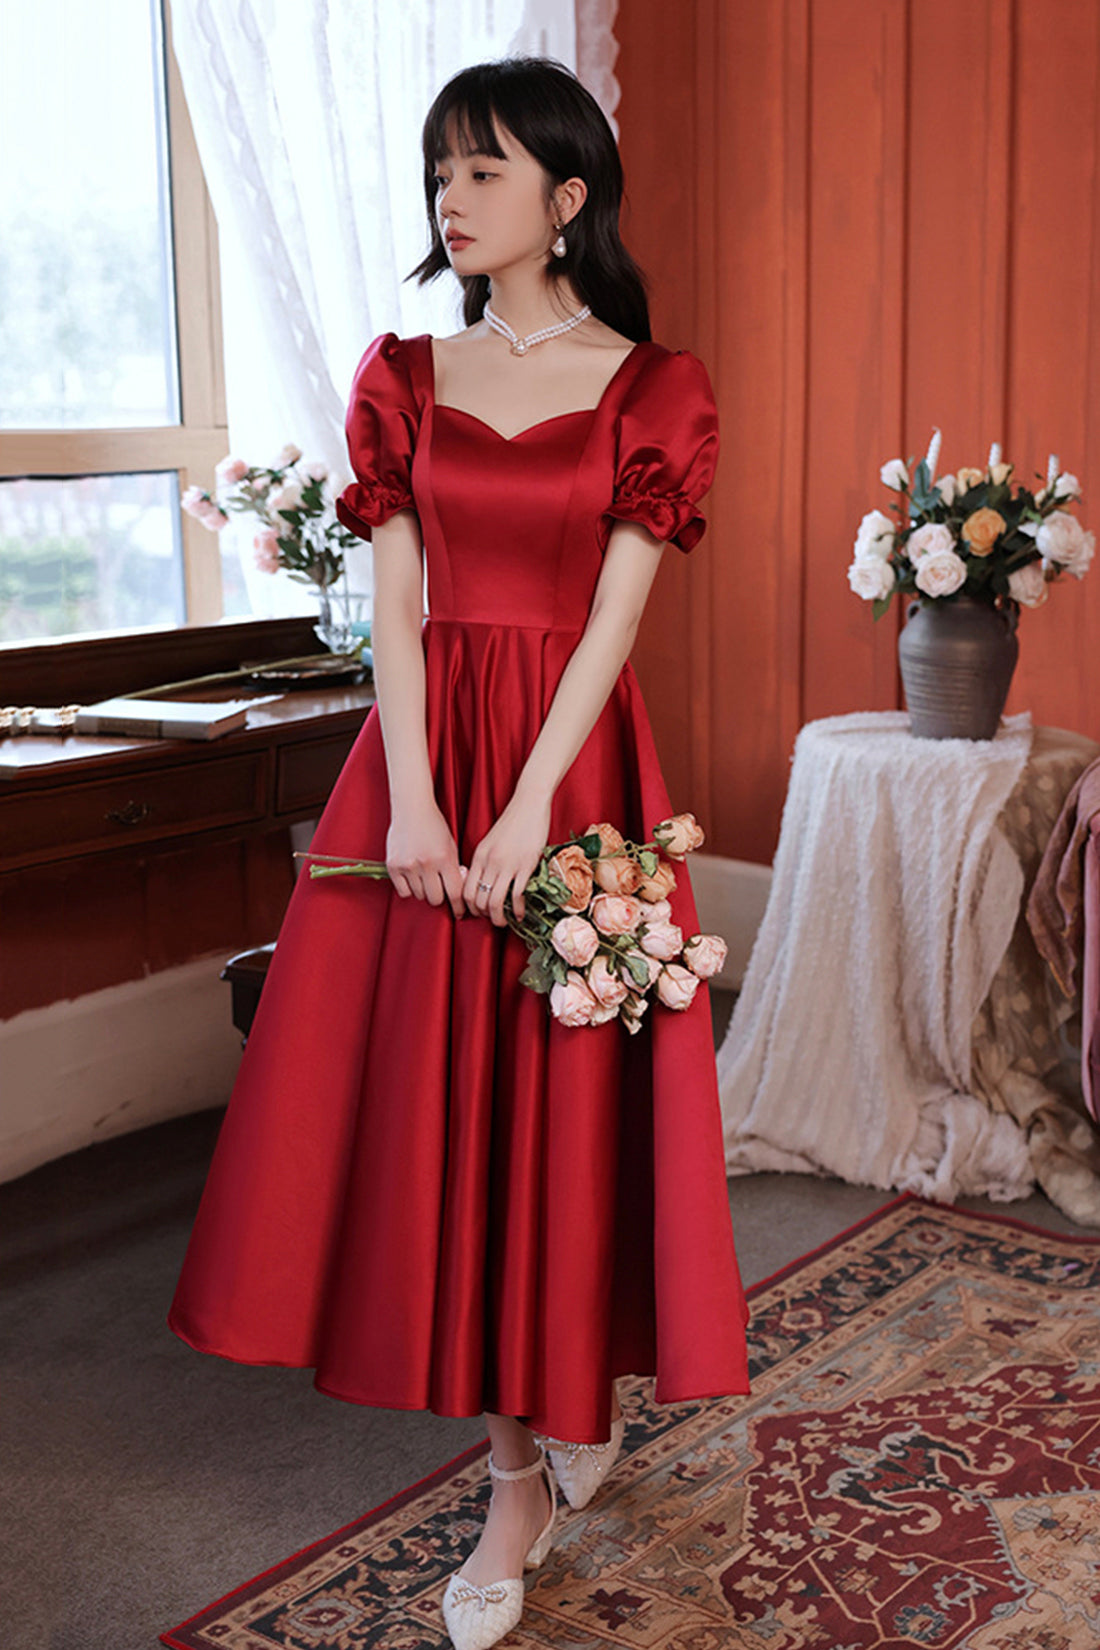 Burgundy Satin Short Prom Dress, Cute A-Line Evening Party Dress